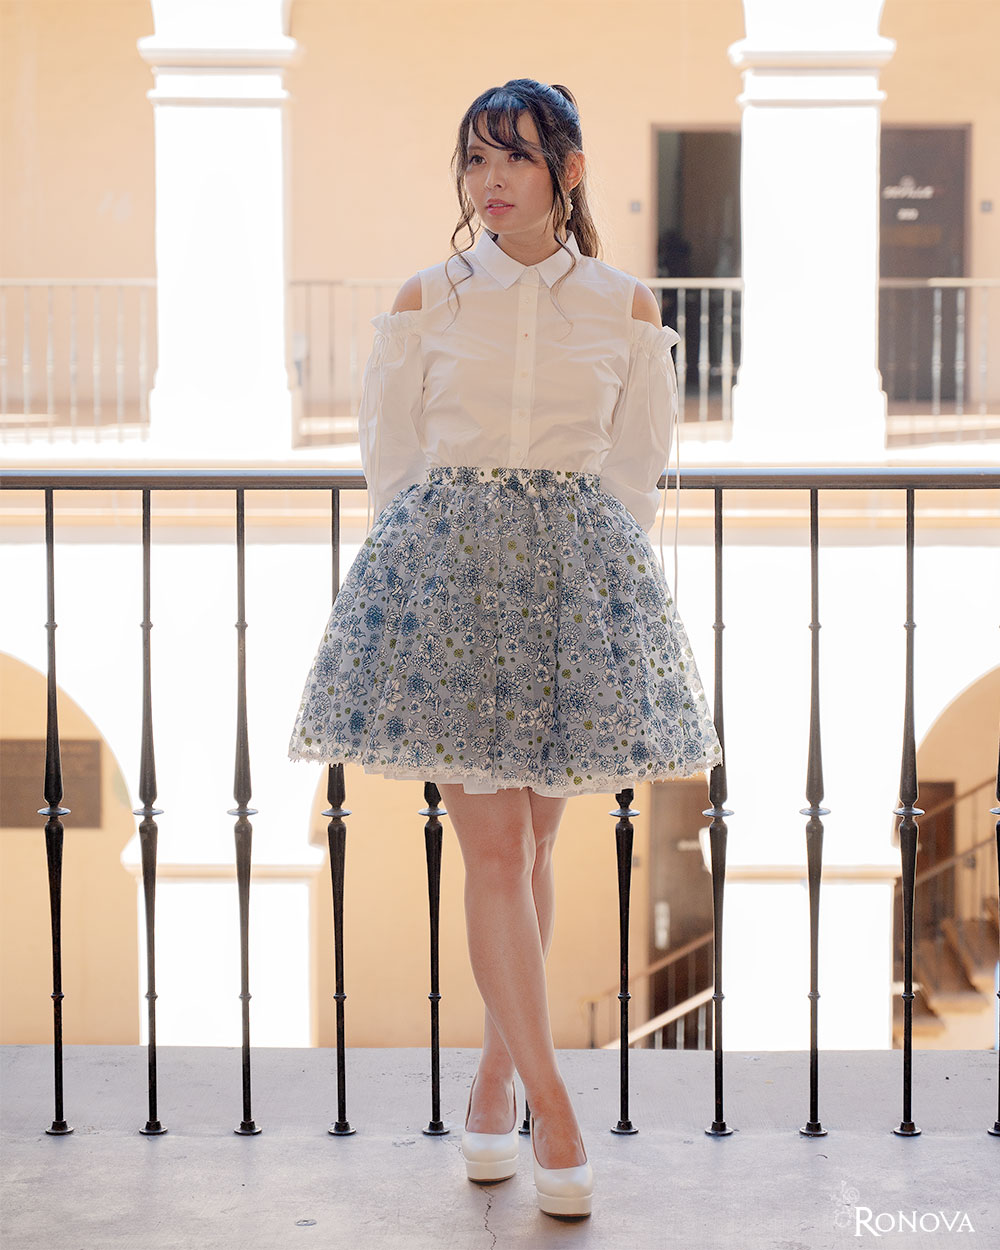 Ronova Ikeban Petticoat and Cold Shoulder Blouse